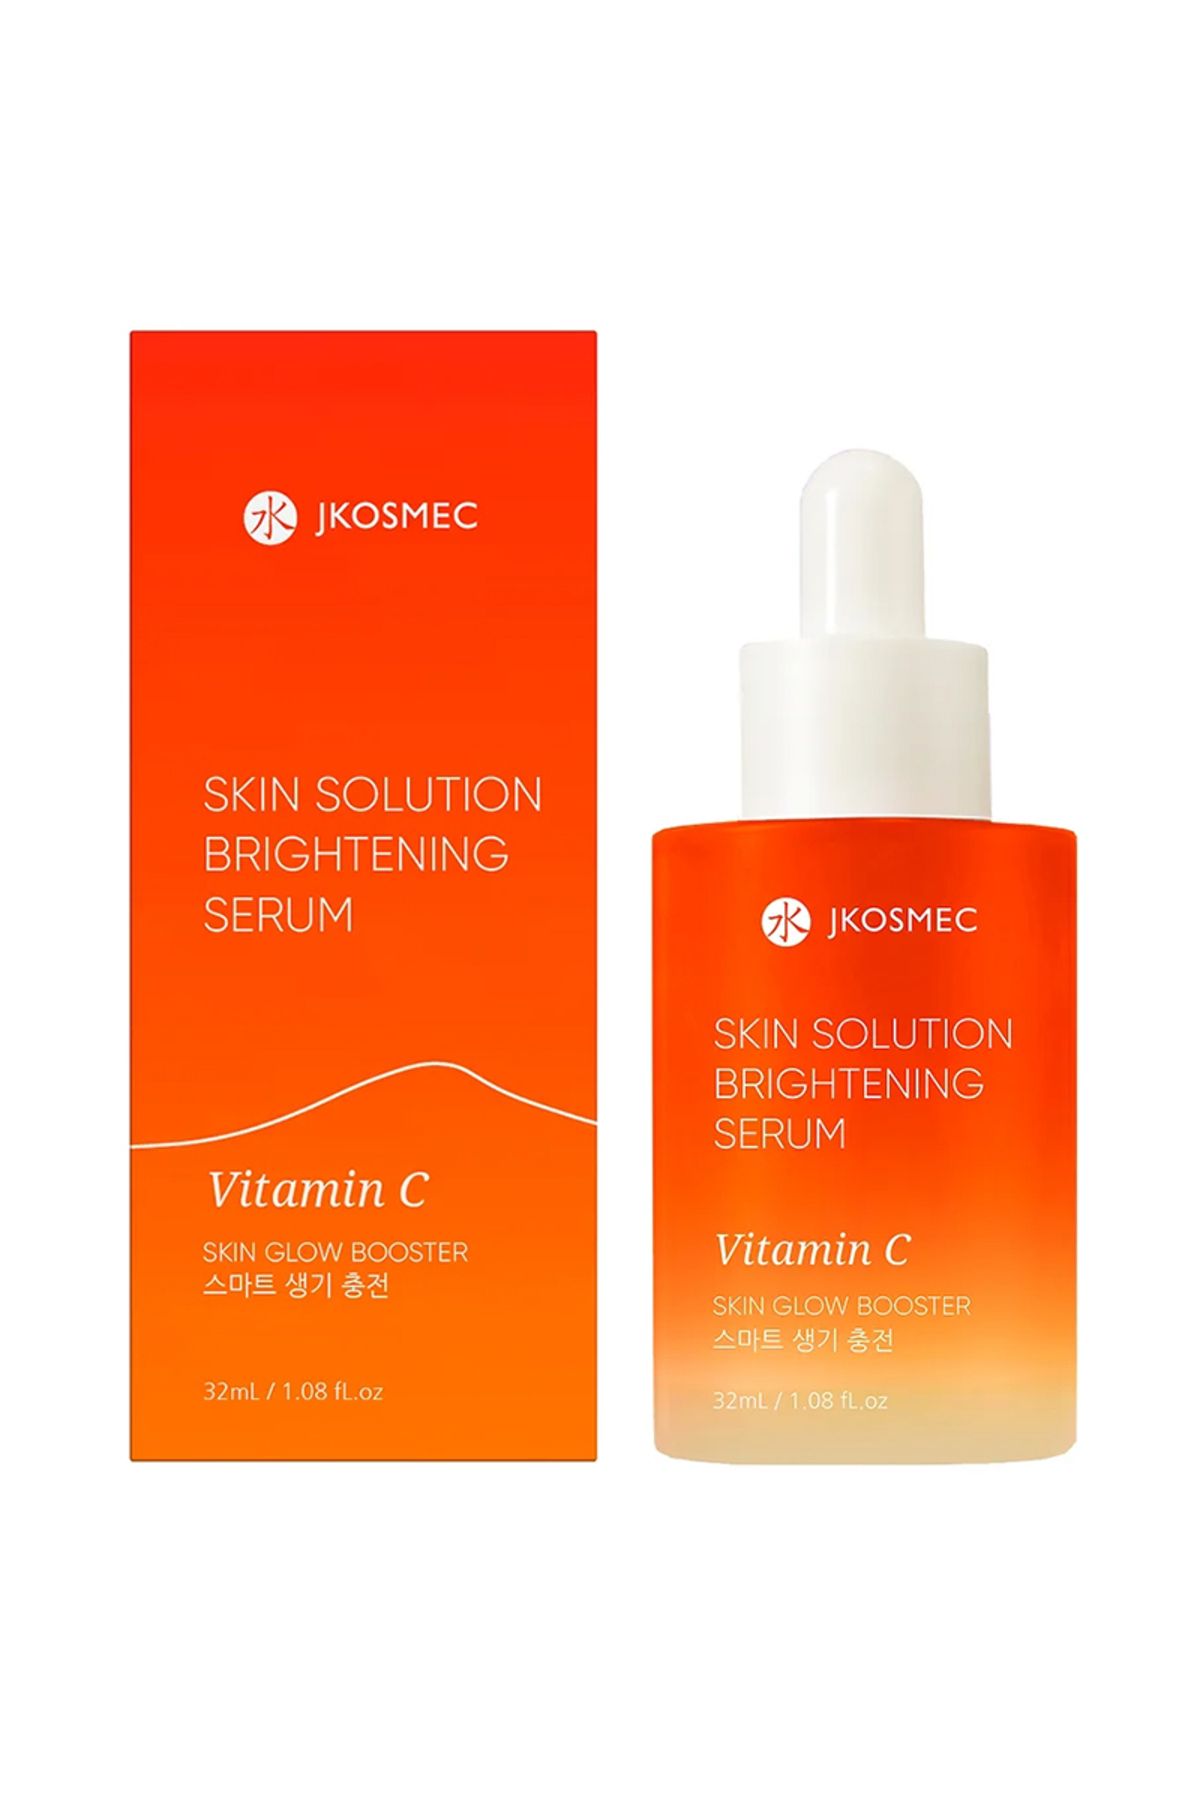 JKosmec Skin Solution Brightening VitaminC Serum